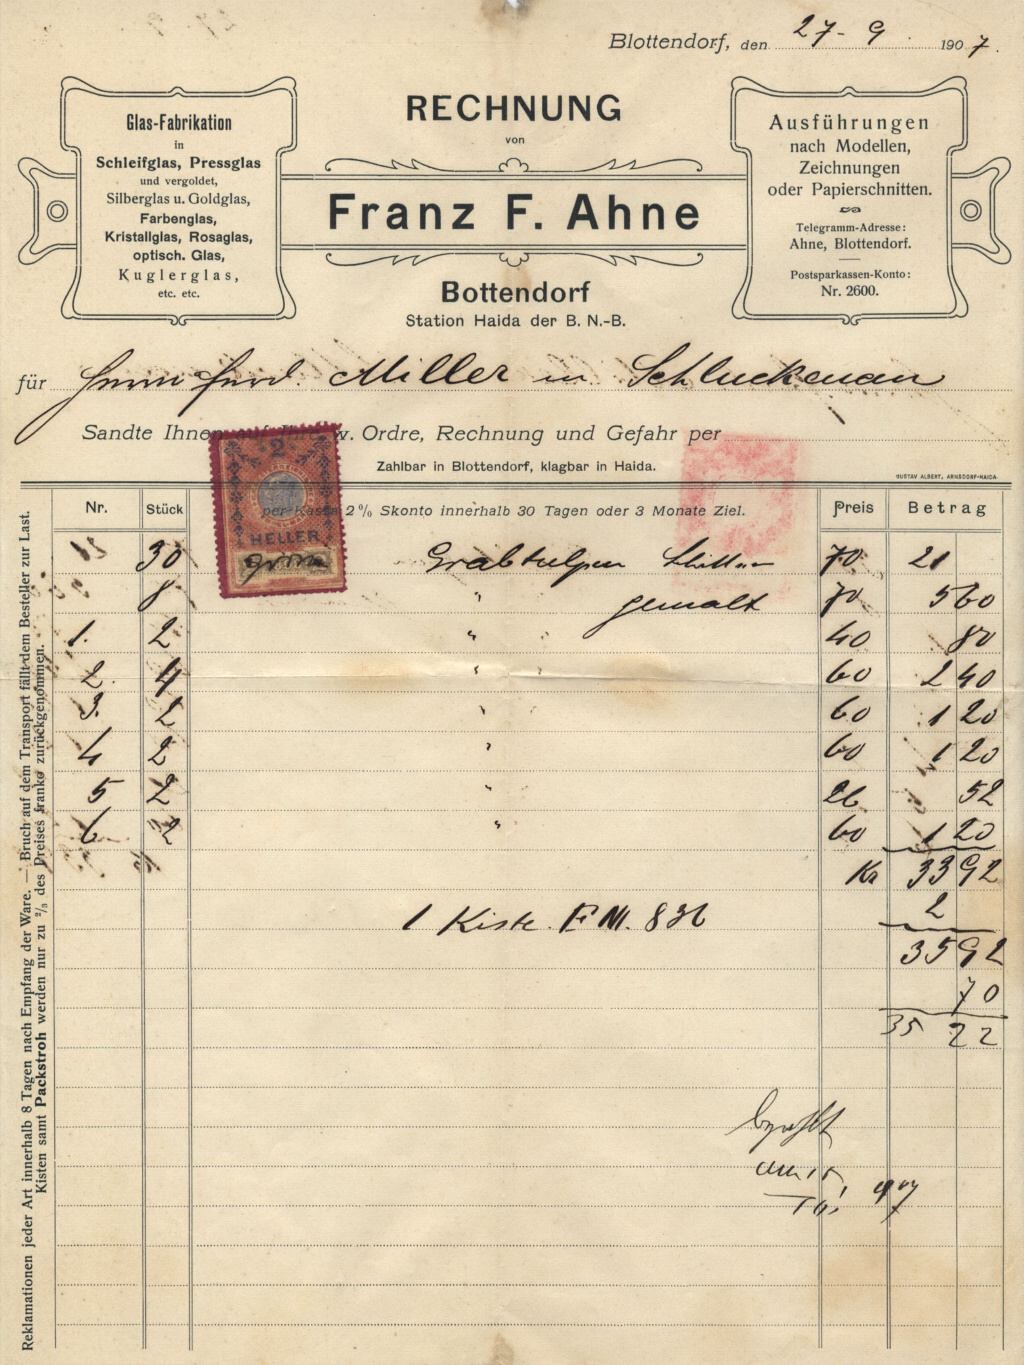 "Franz Ahne 1907 (back)"